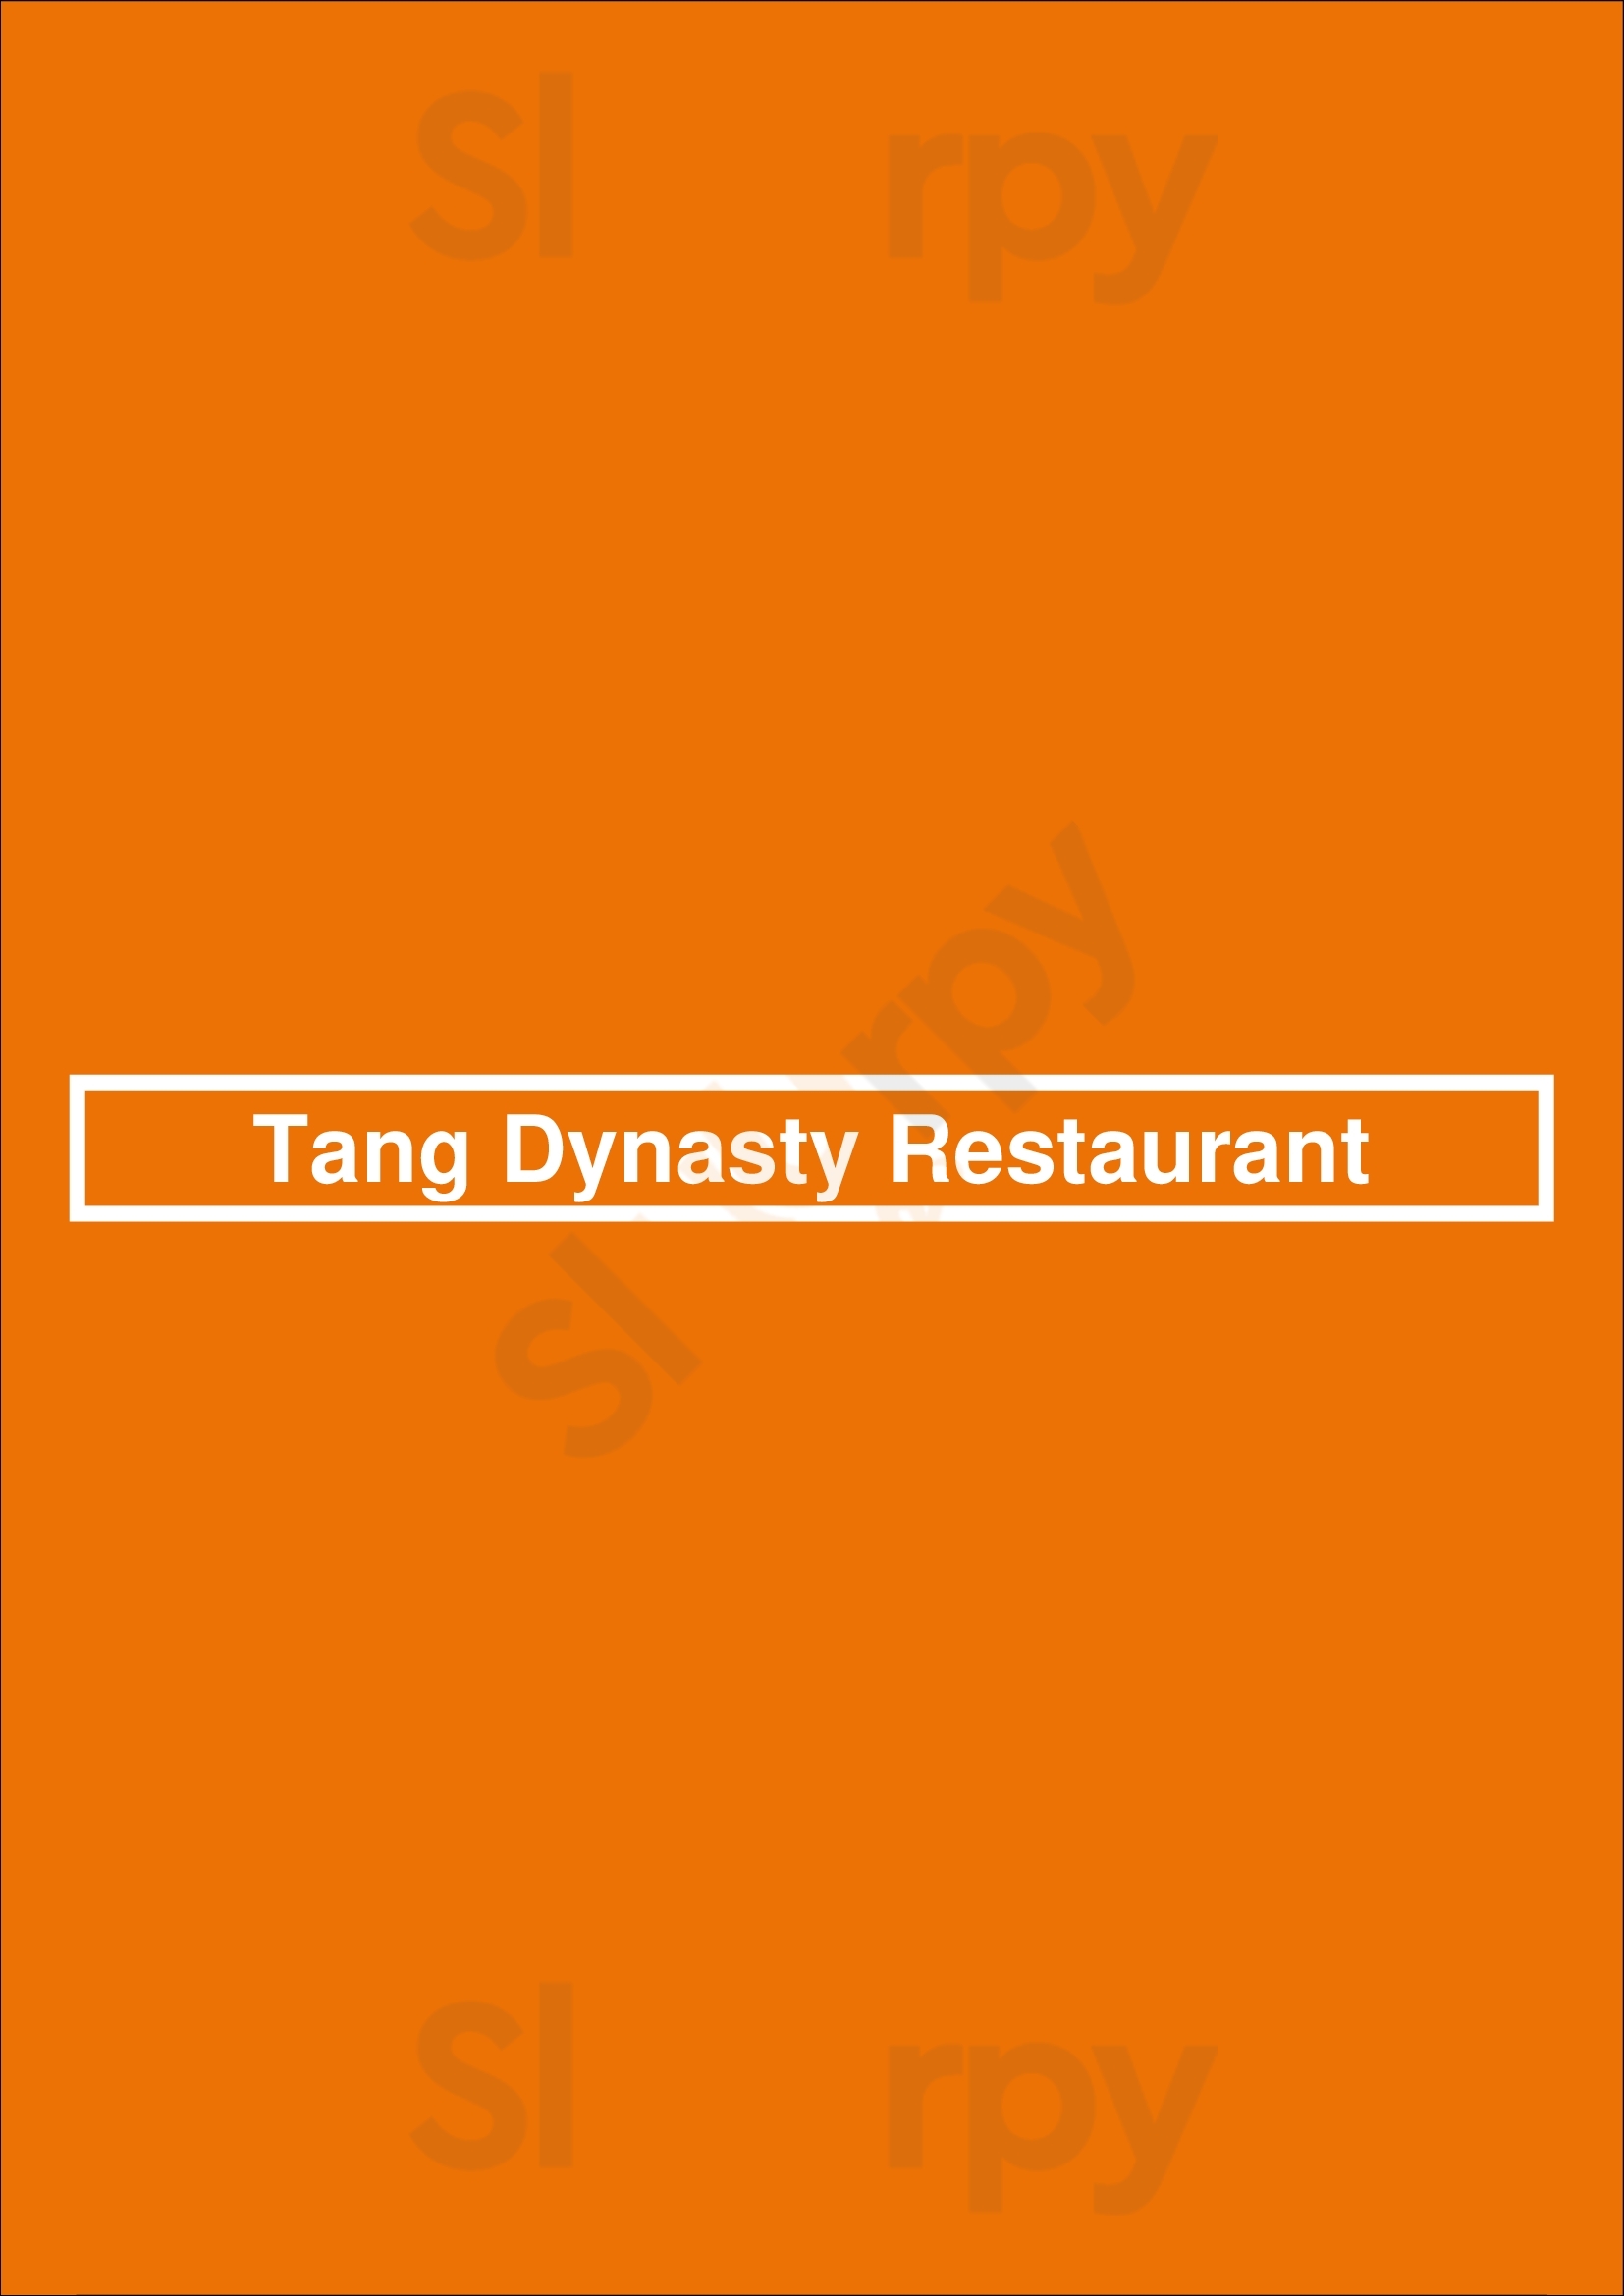 Tang Dynasty Restaurant Calgary Menu - 1